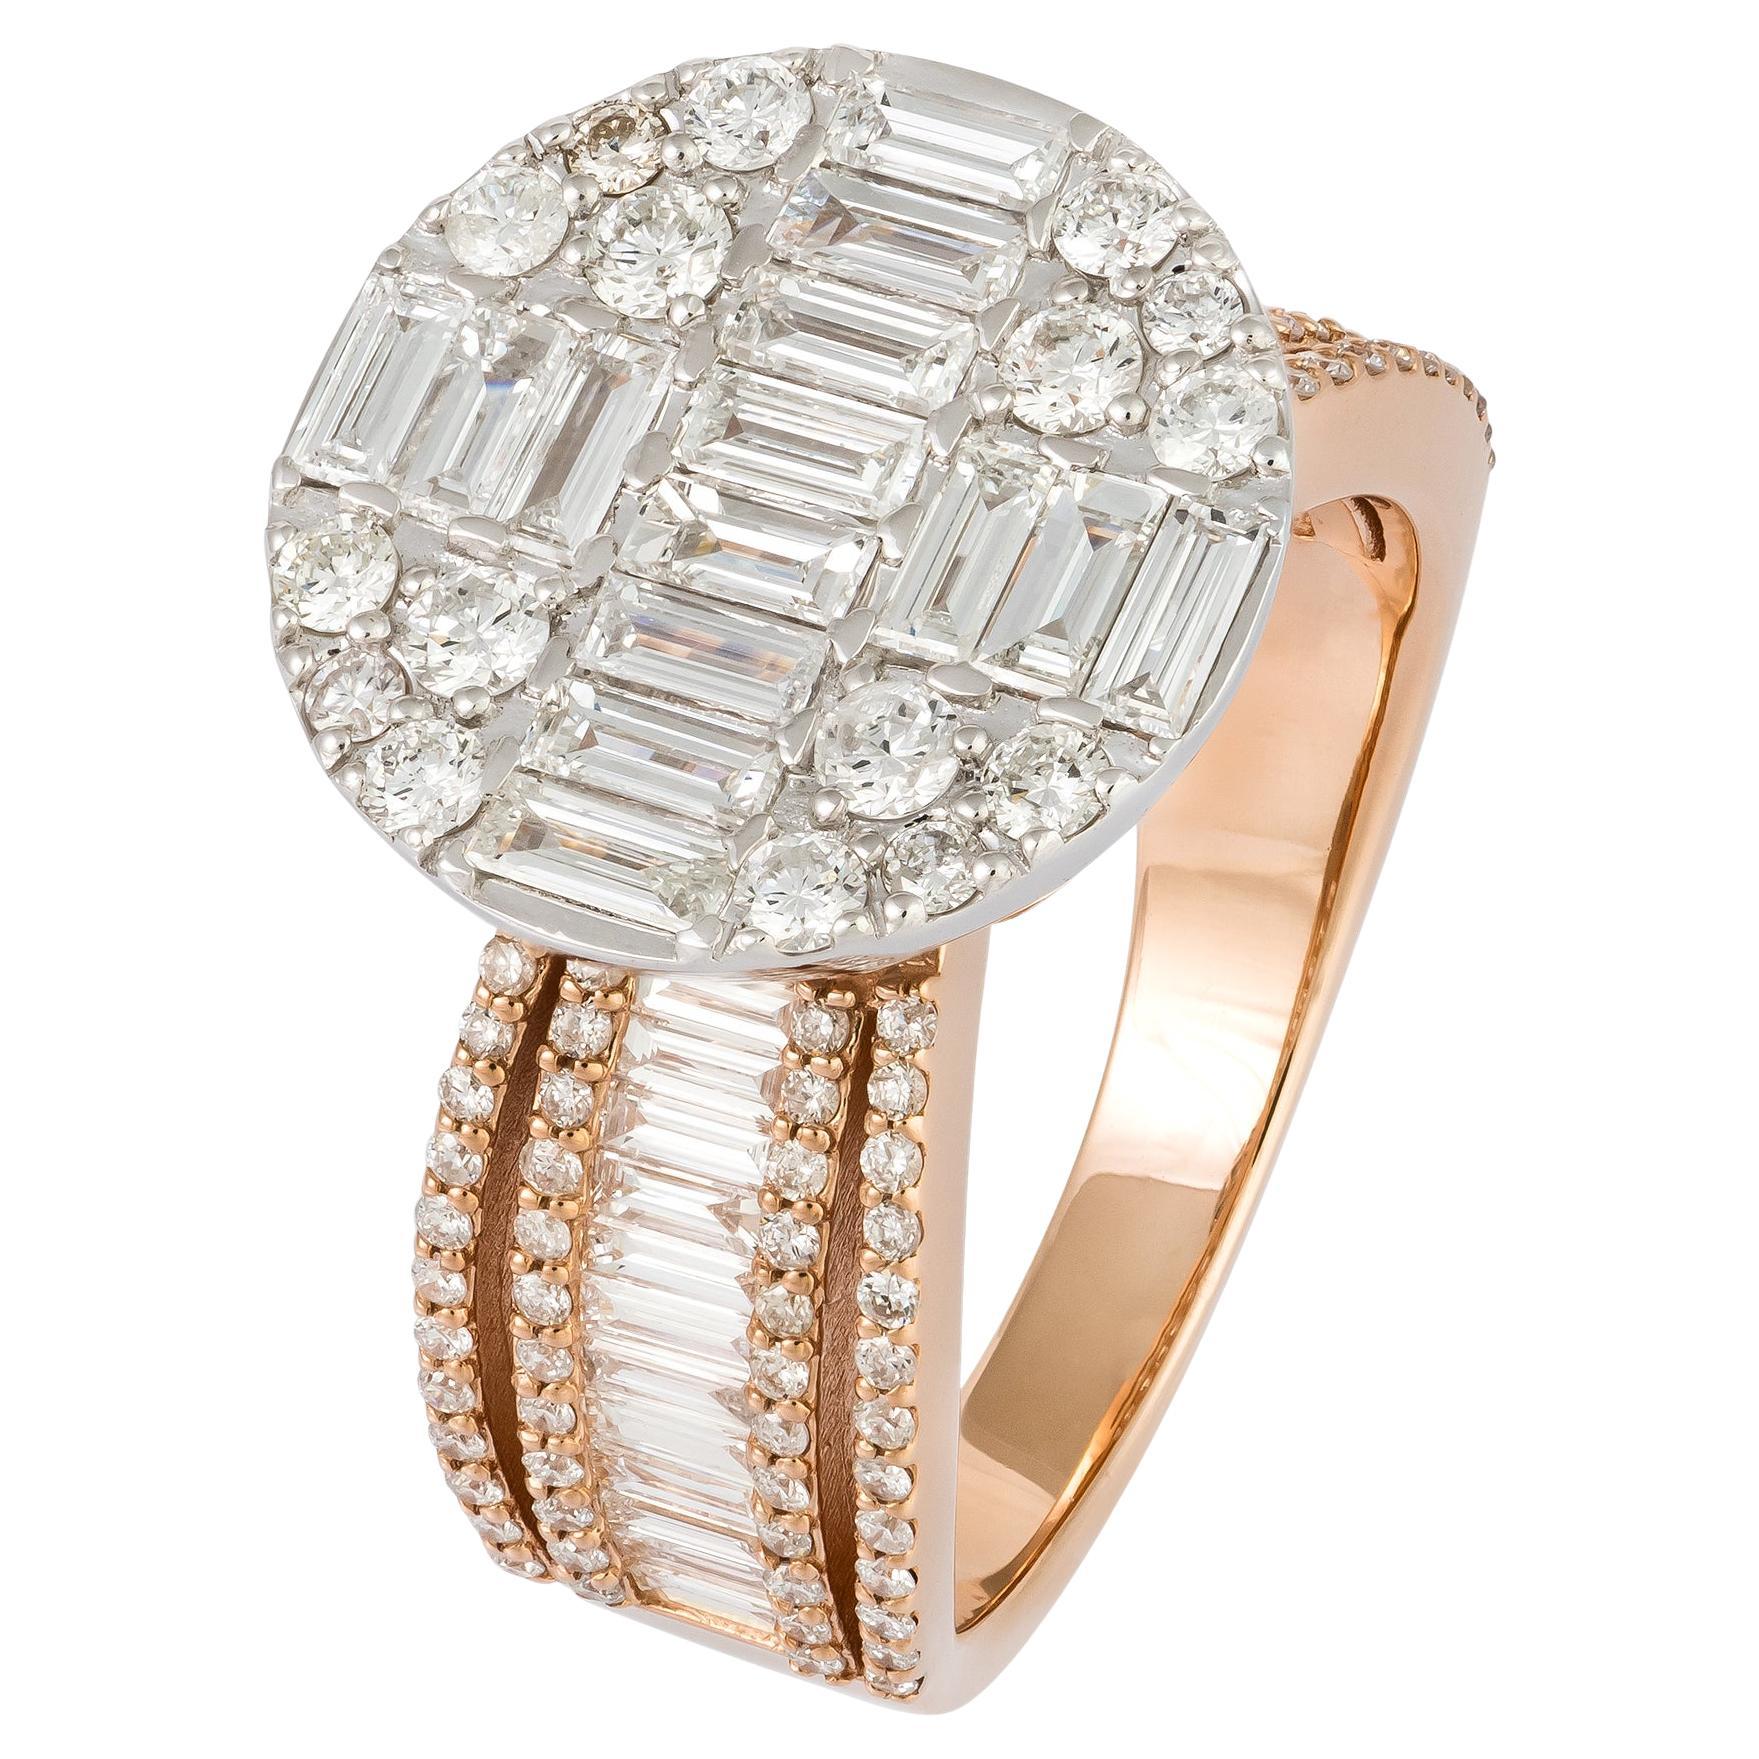 For Sale:  Breathtaking  White Pink 18K Gold White Diamond Ring For Her